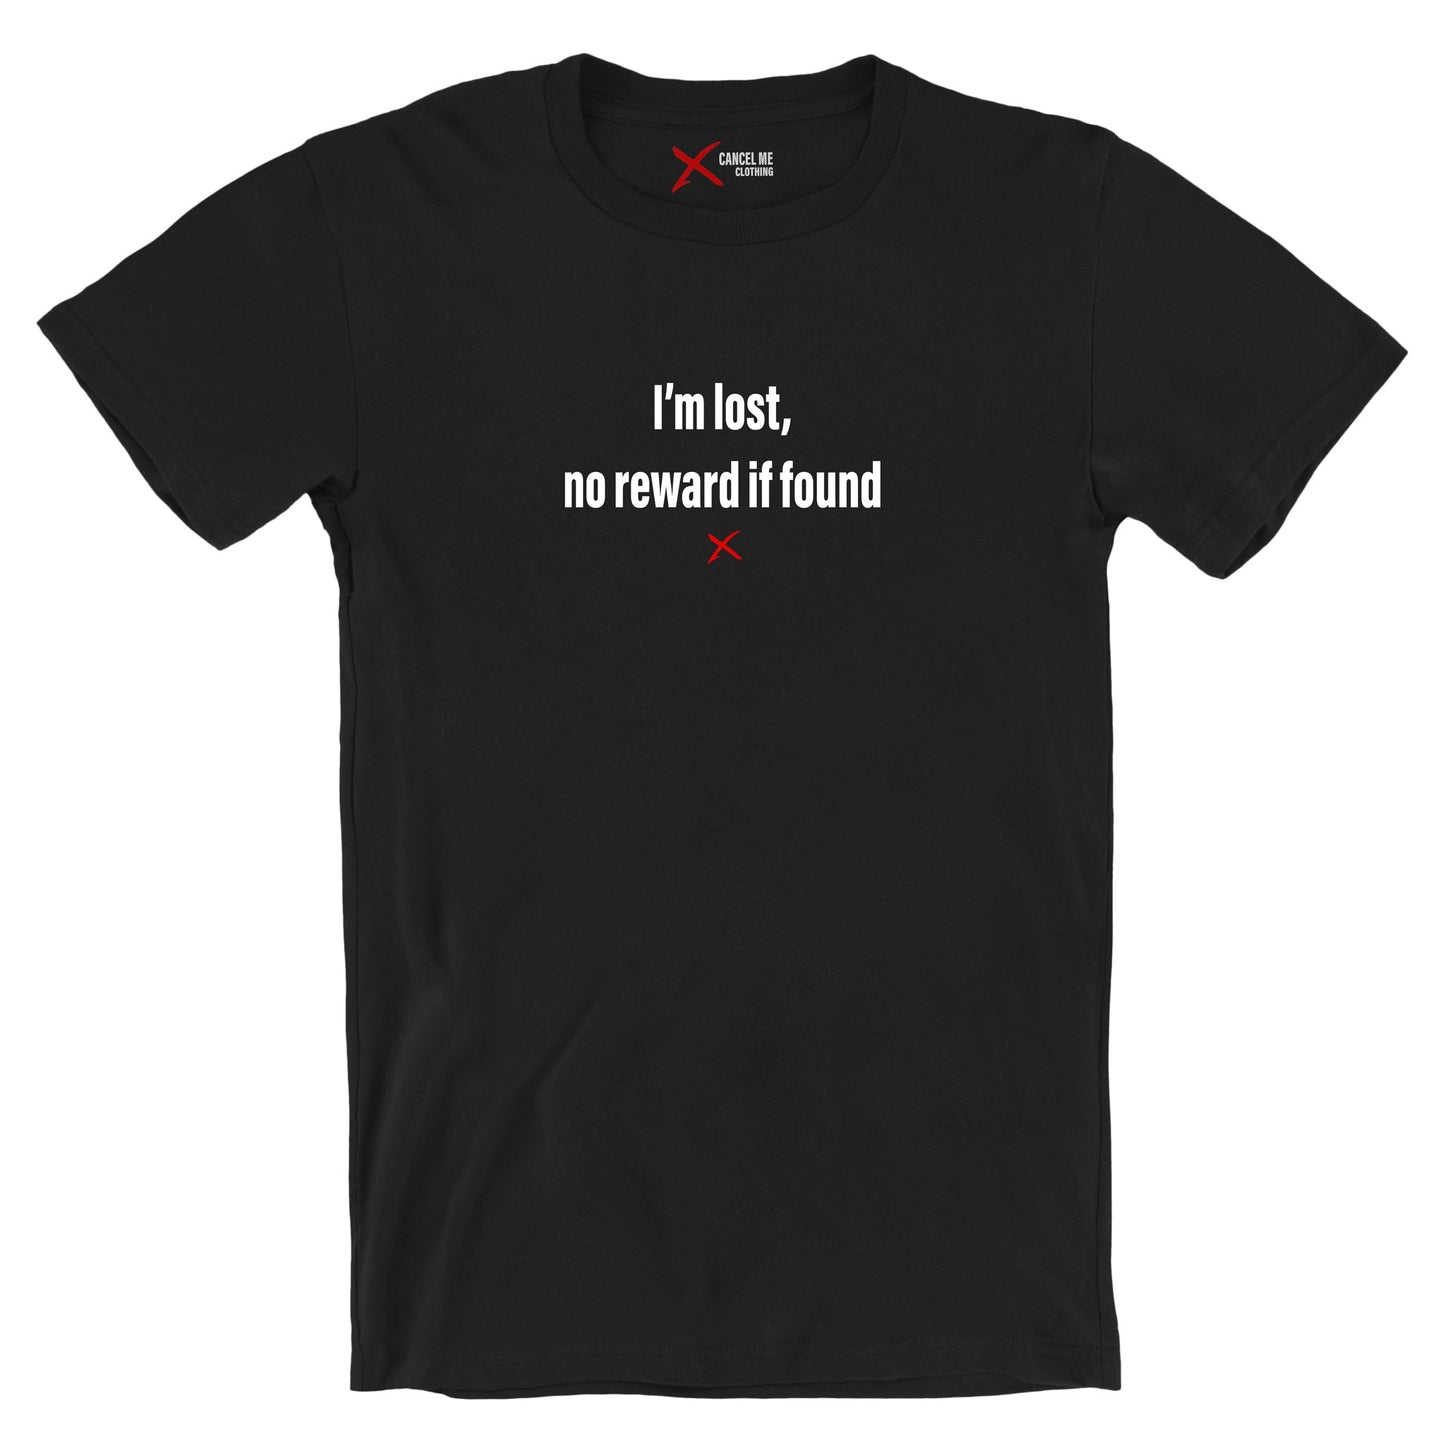 I'm lost, no reward if found - Shirt